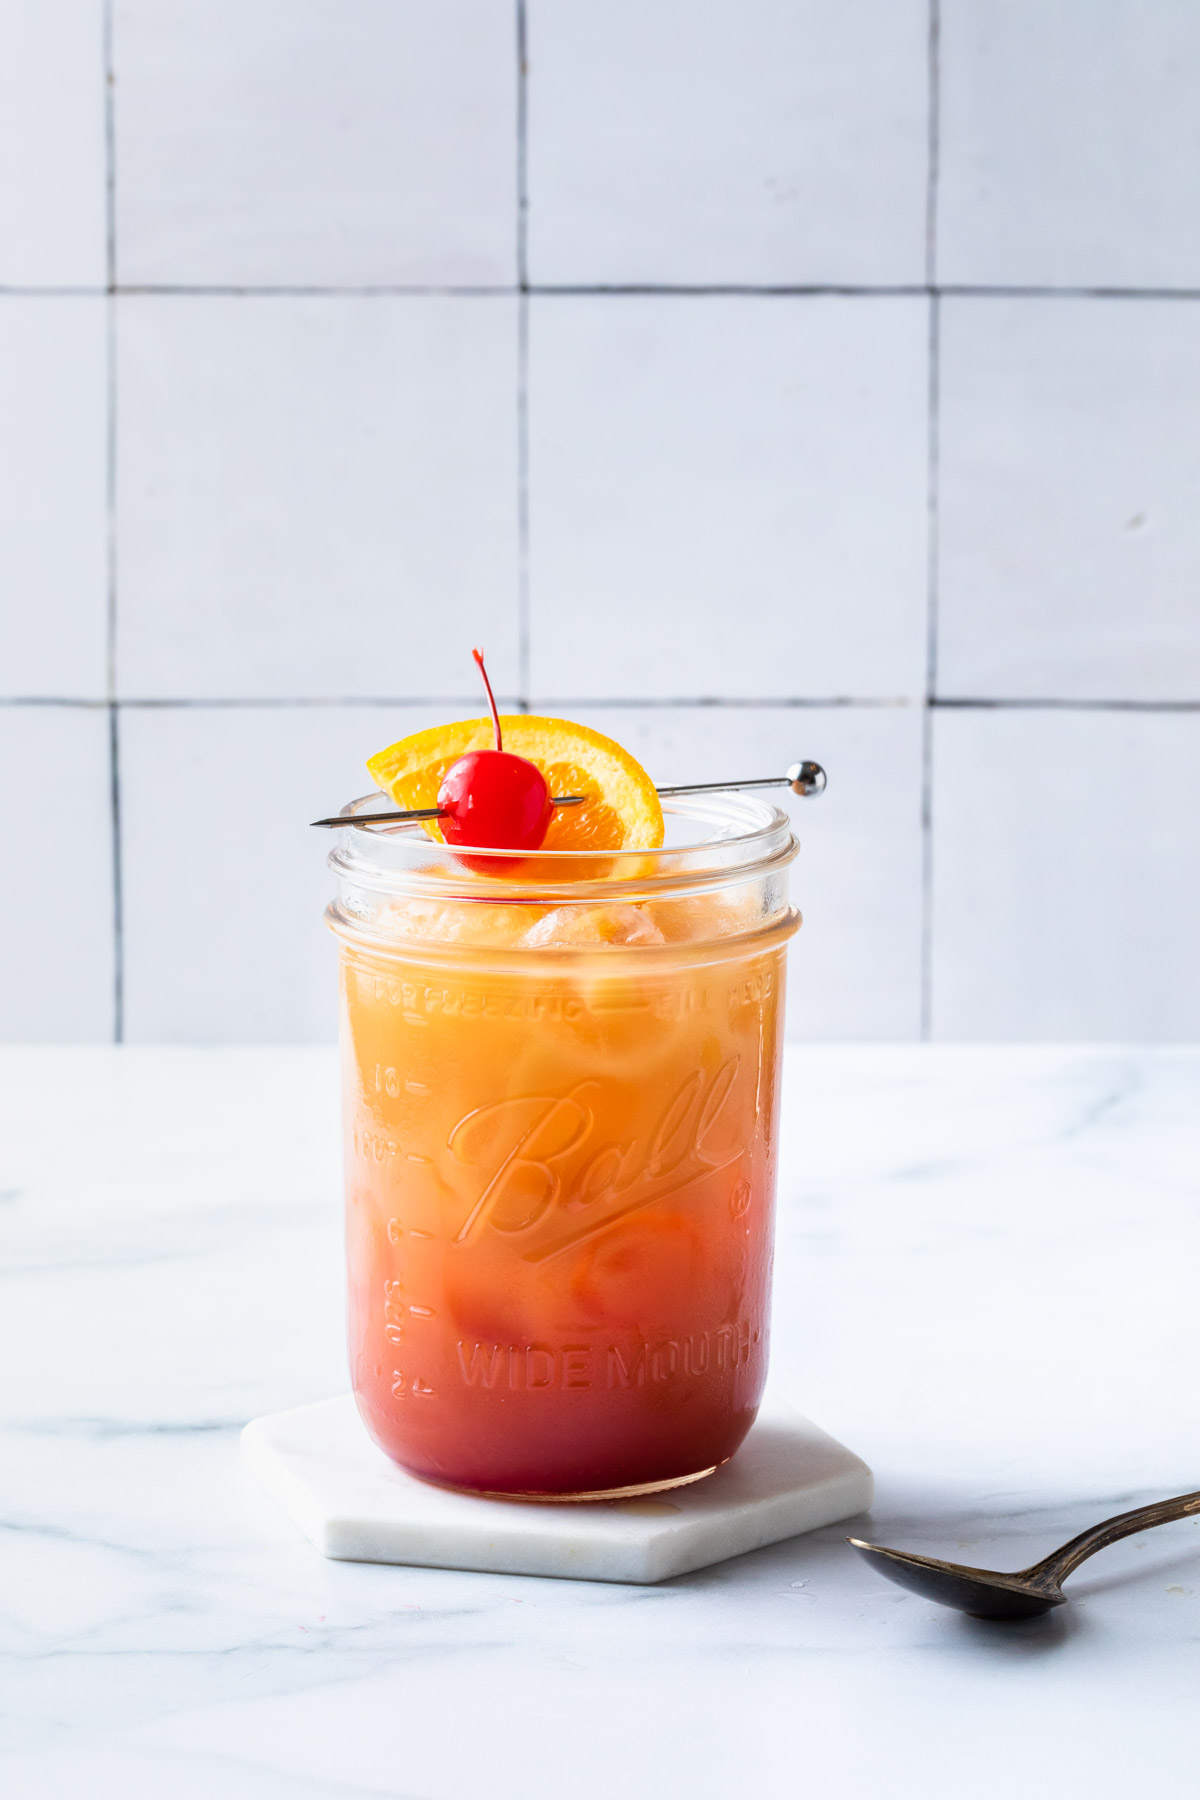 A vodka sunrise in a mason jar glass on a coaster, garnished with a maraschino cherry and an orange slice.